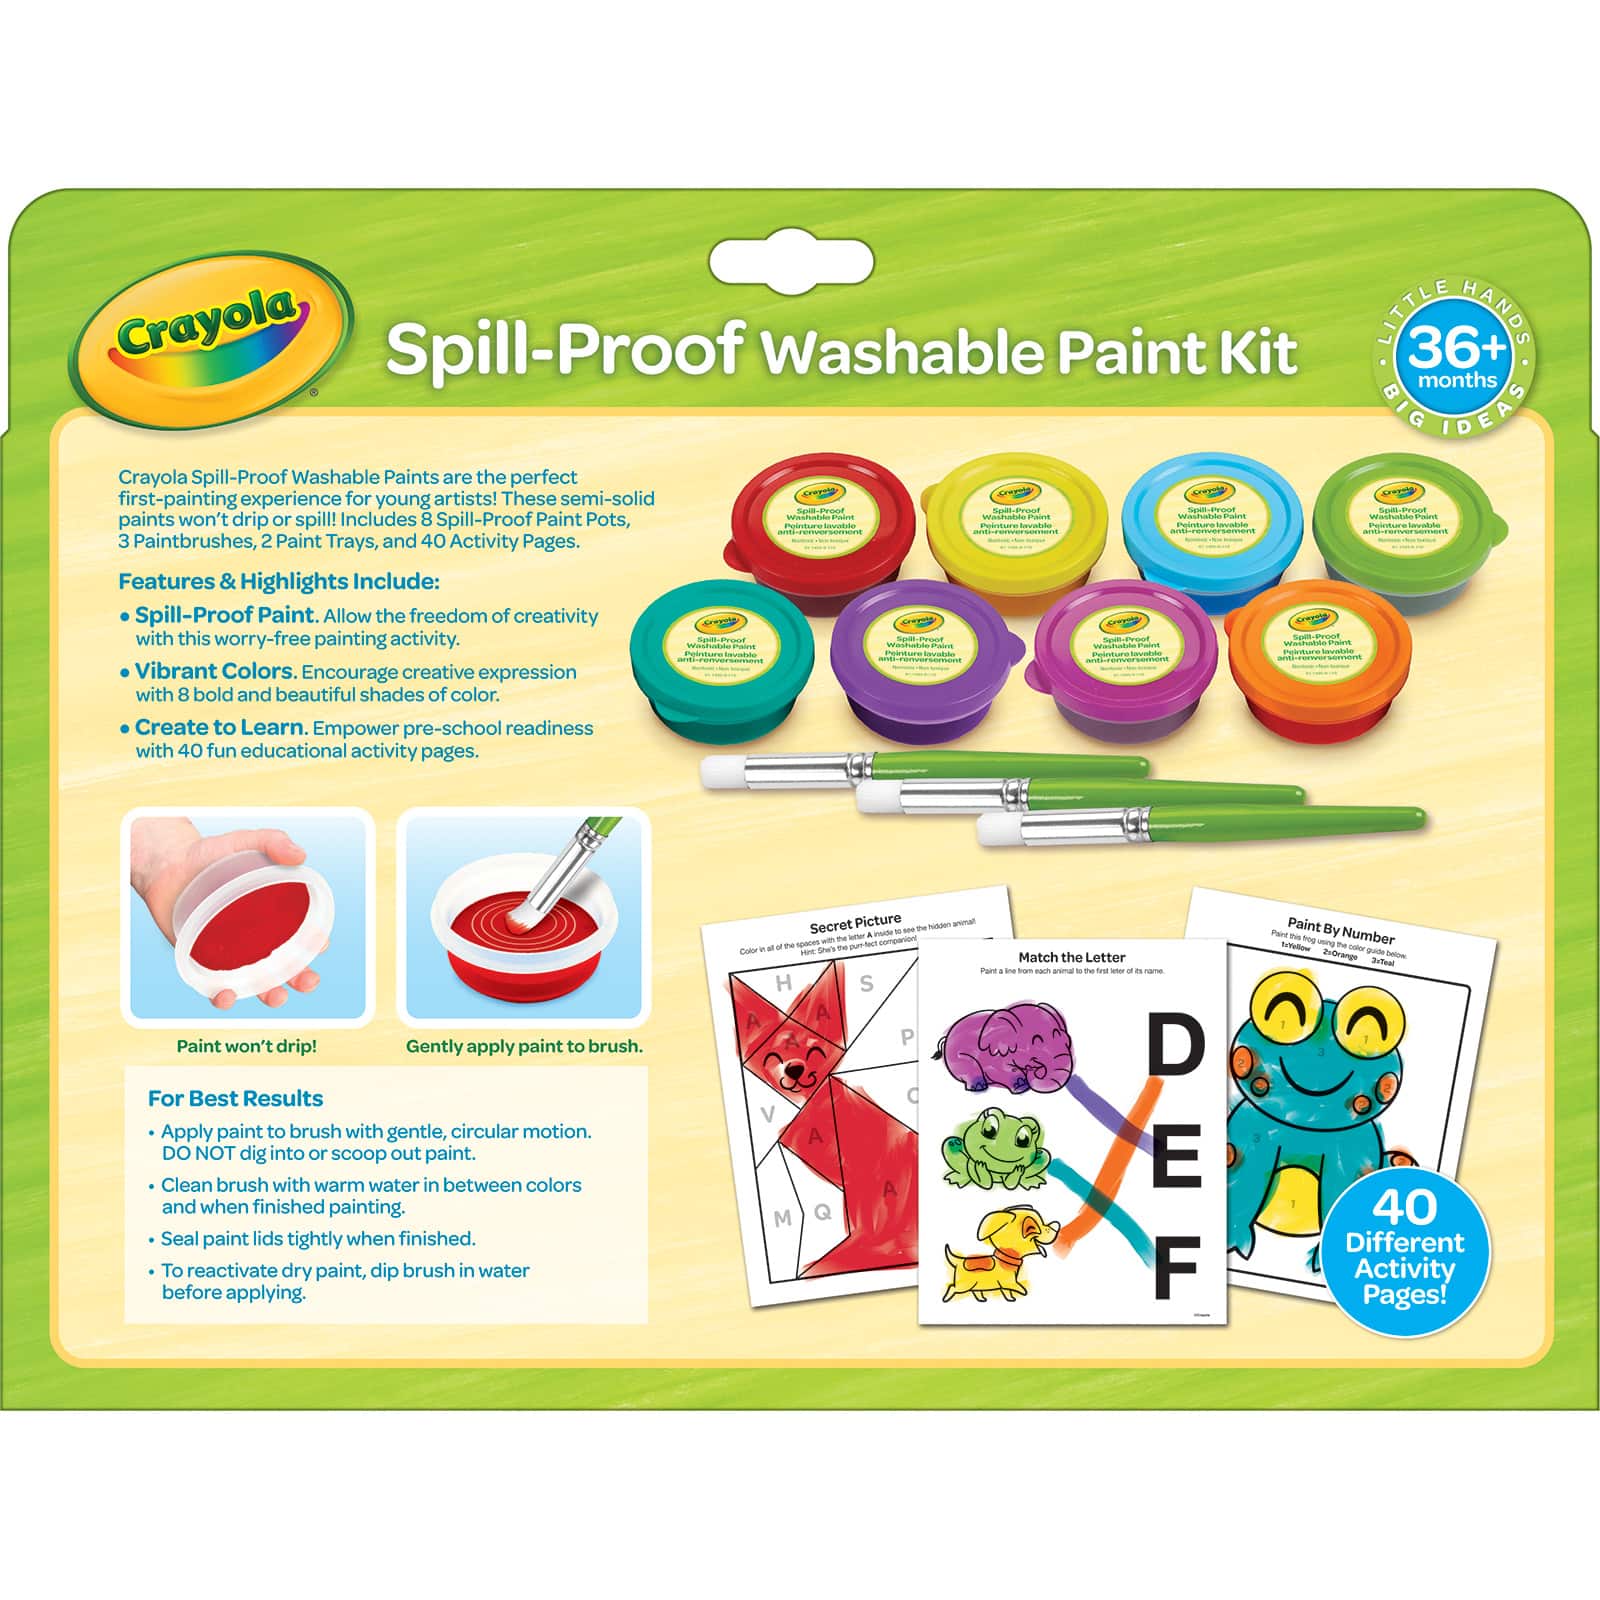 Spill Proof Paint Set, Washable Paint for Kids, Crayola.com